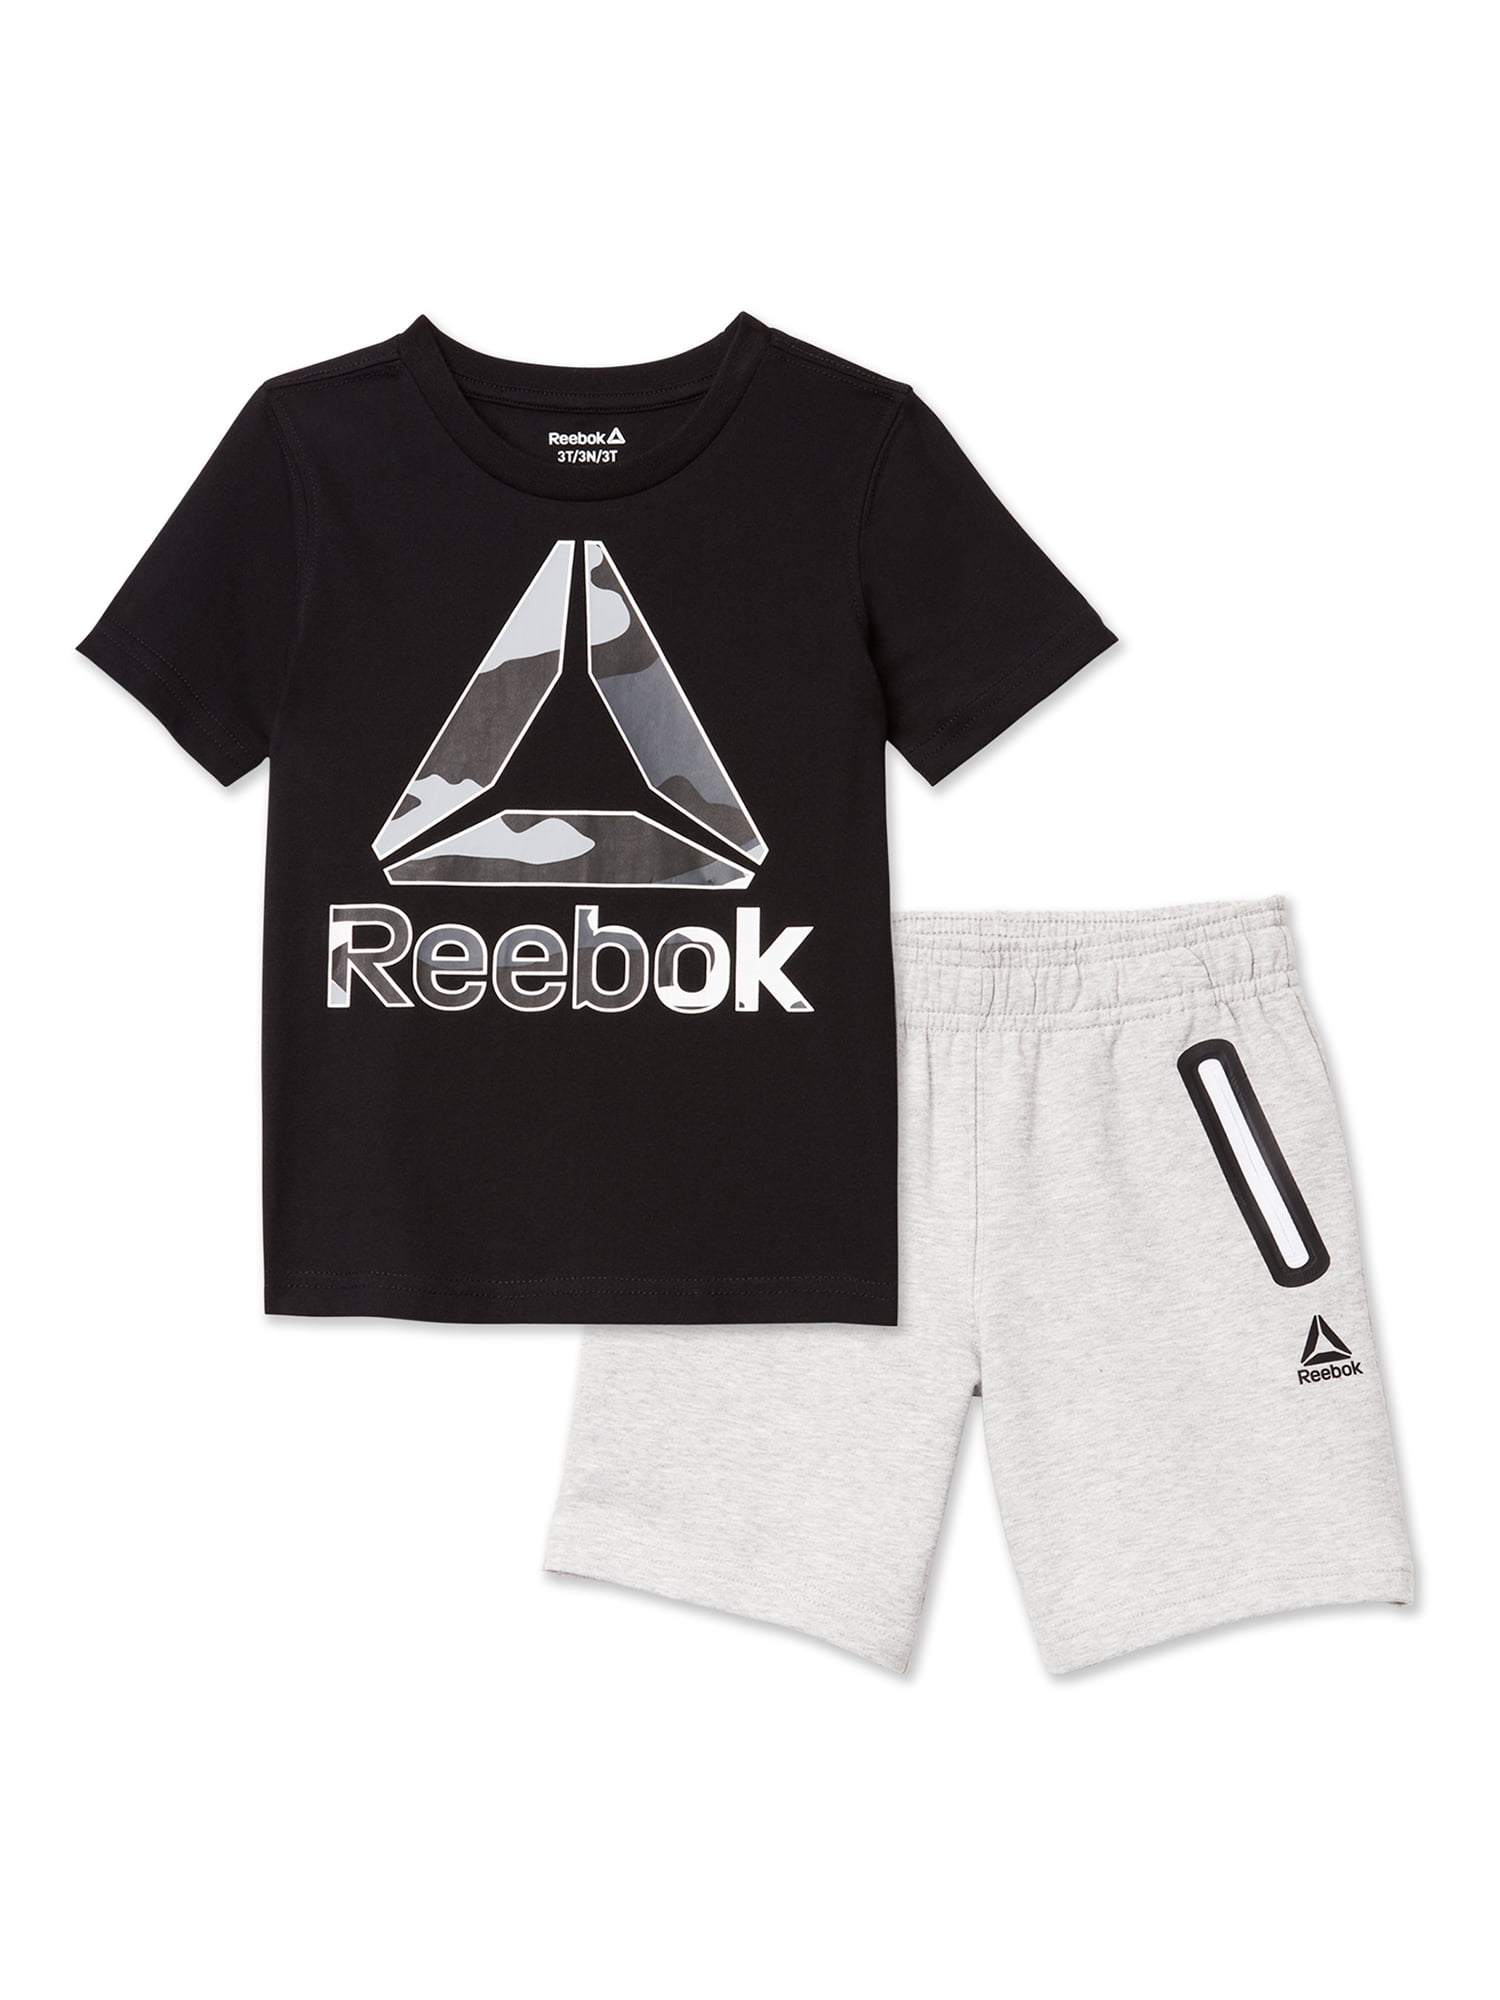 2 Reebok Boys Short Sleeve Athletic Graphic T-Shirt 